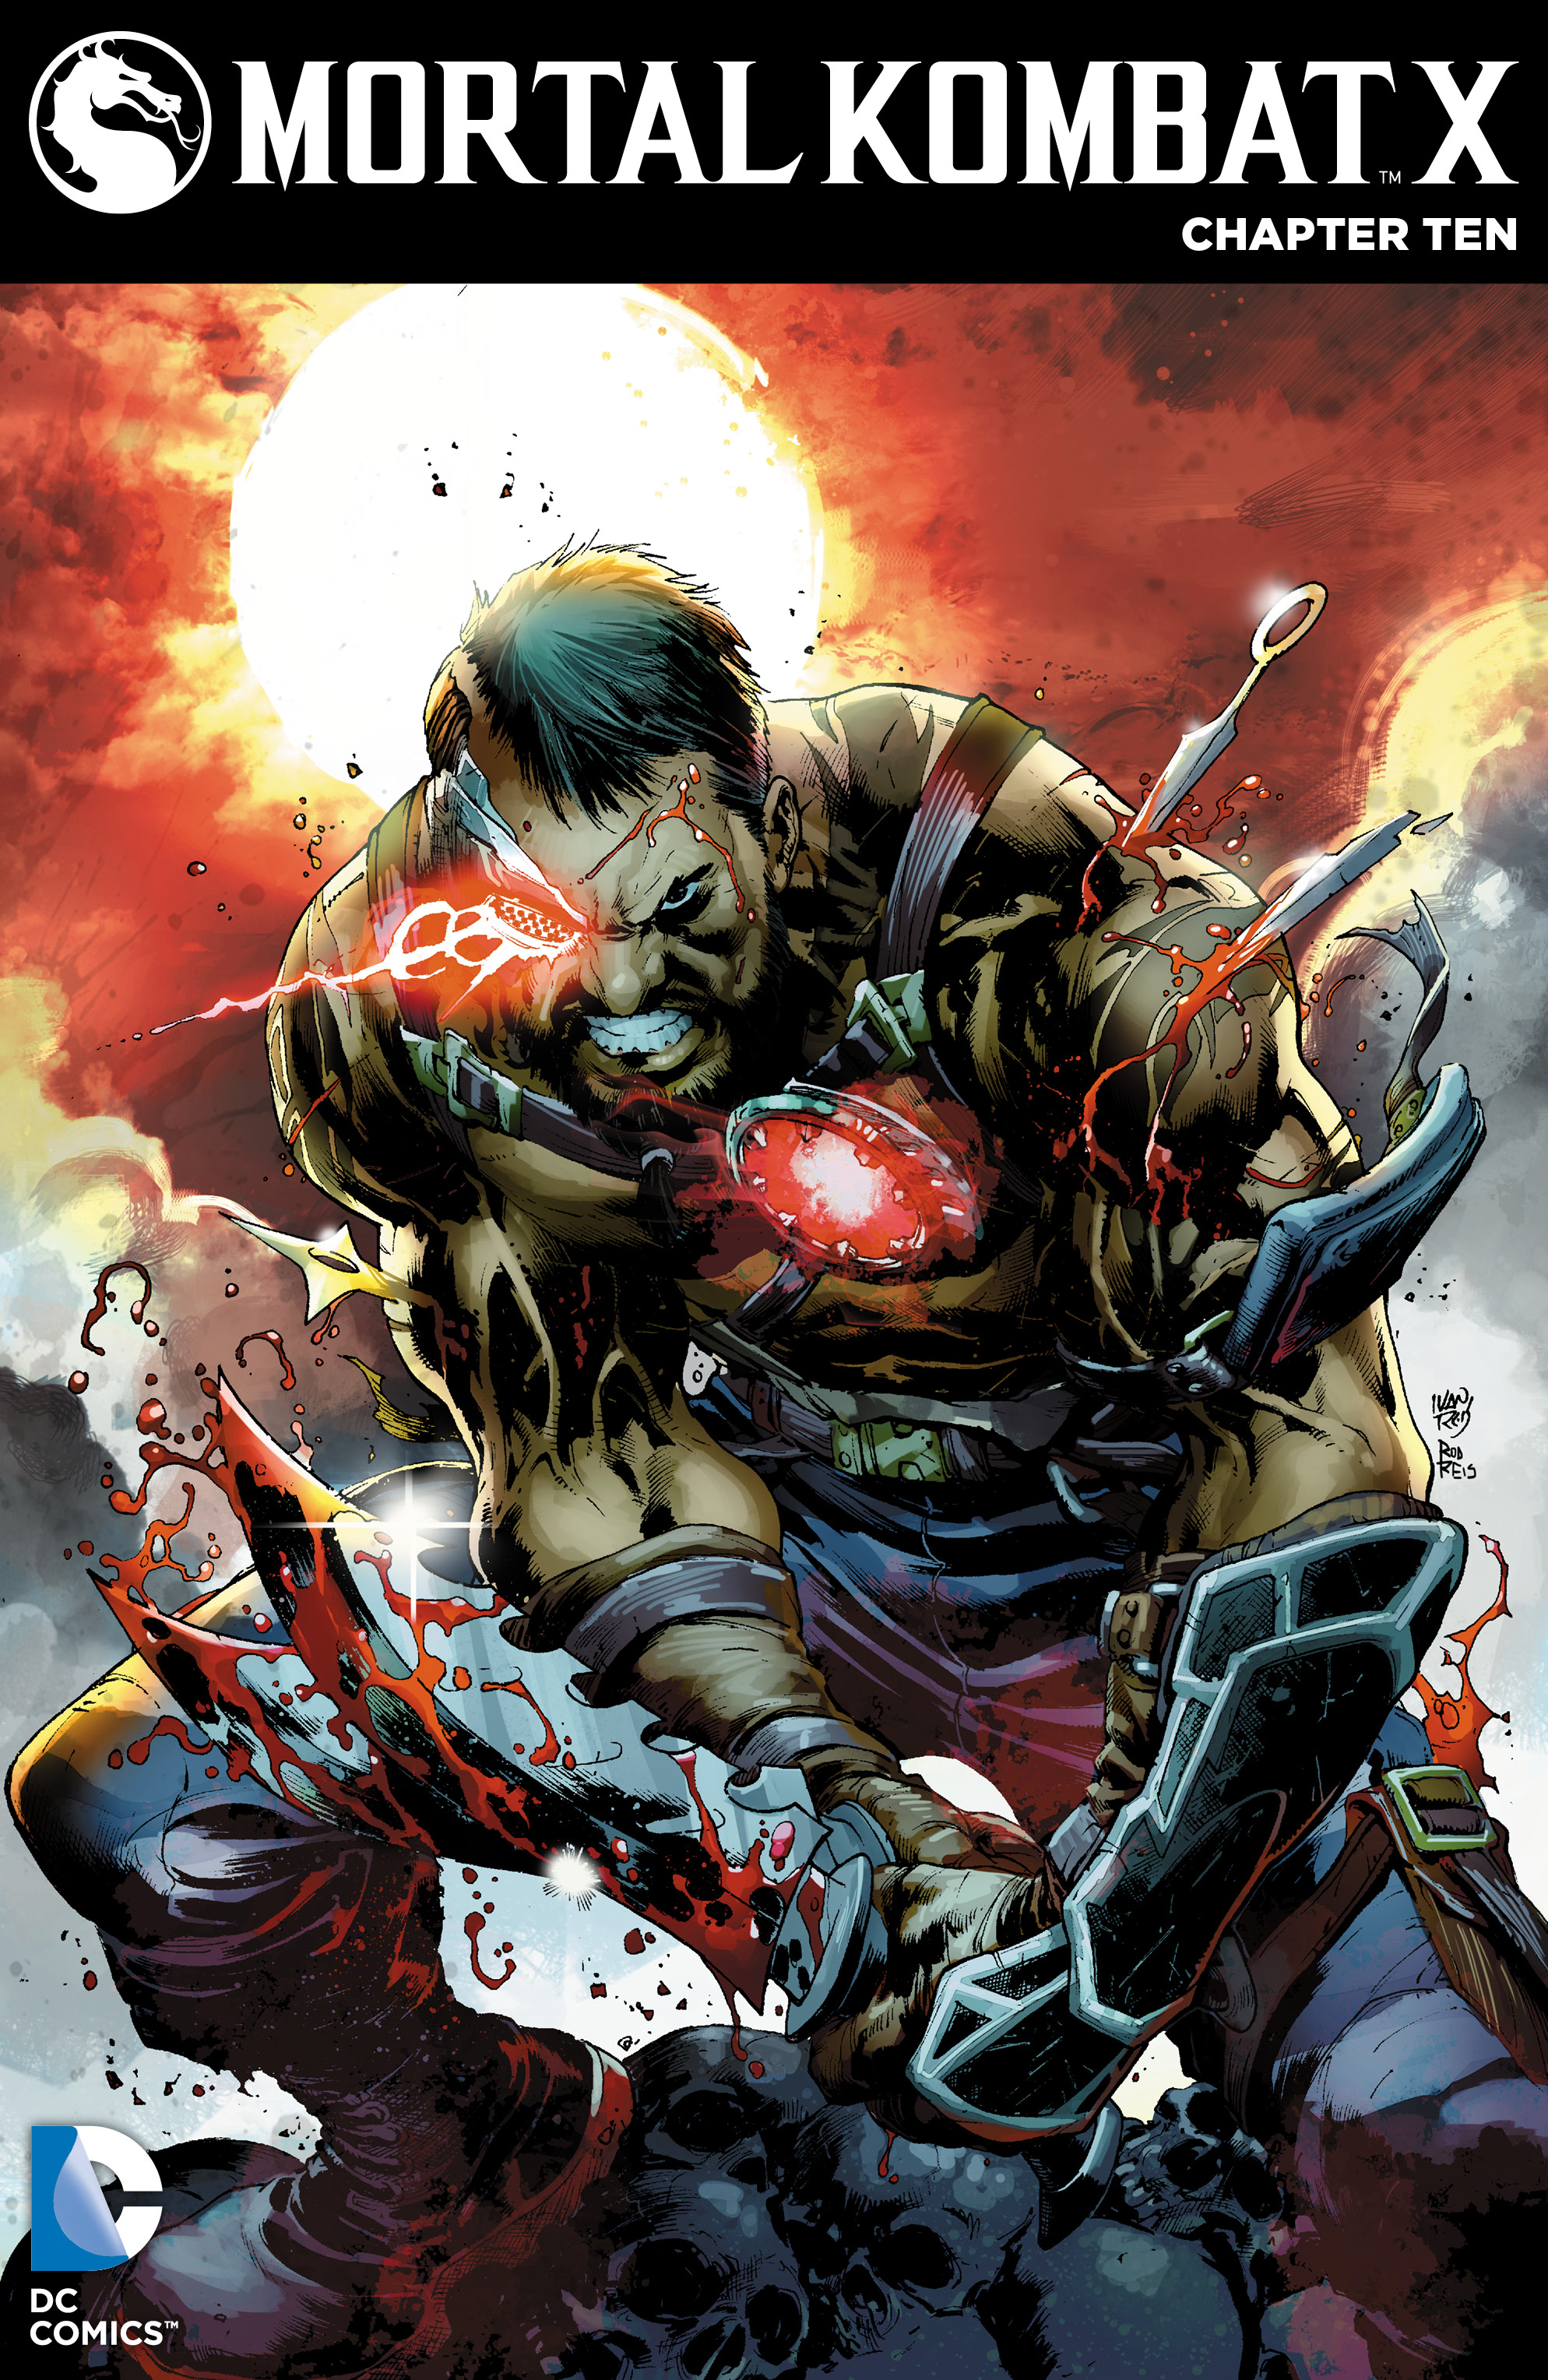 Mortal Kombat X #10 preview images